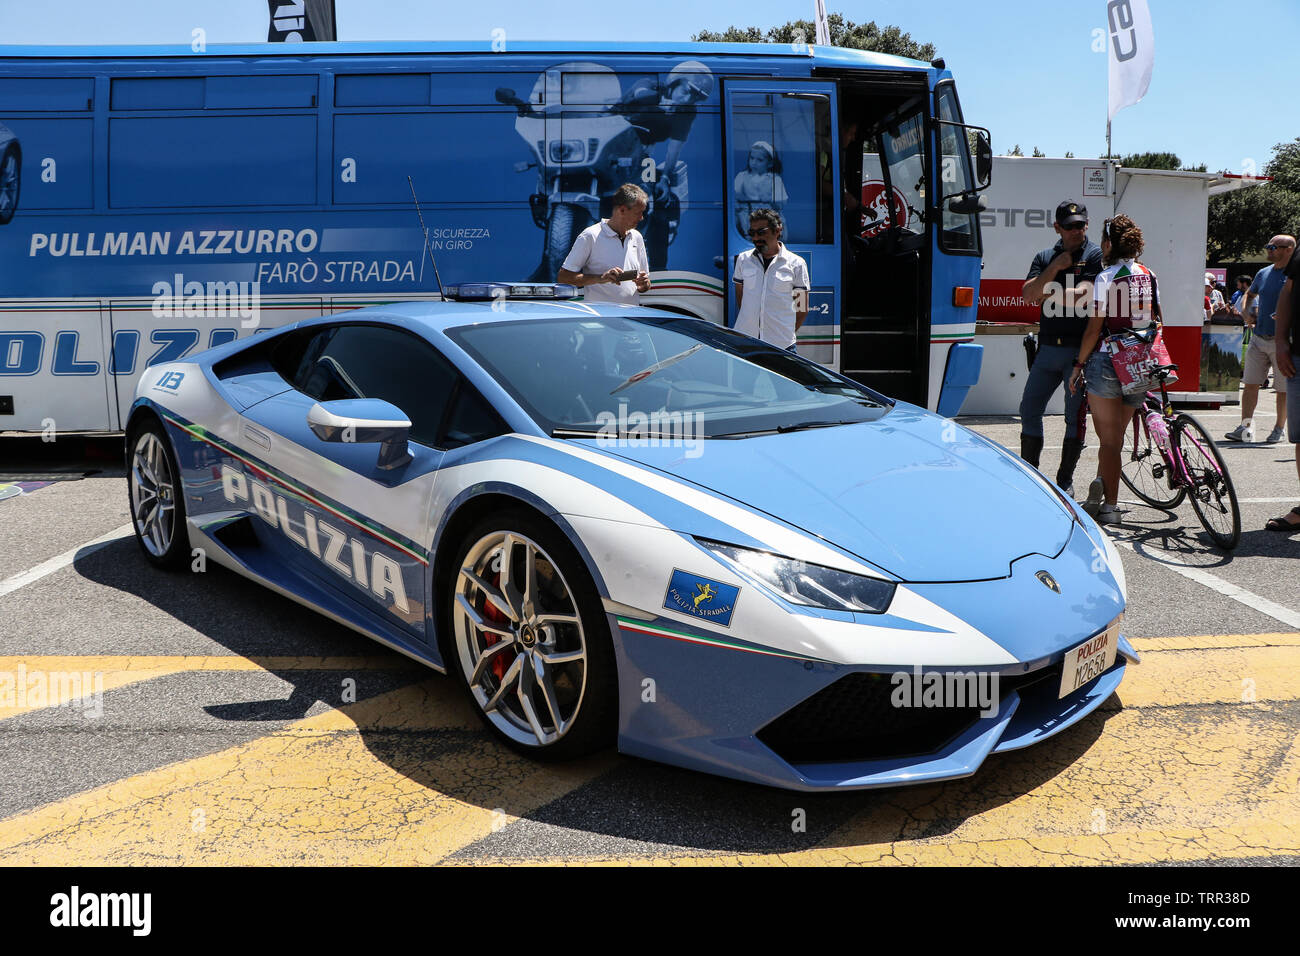 Le Pullman Azzurro de la police italienne la Polizia Stradale au Giro d'Italia 2019 à Vérone Italie Banque D'Images